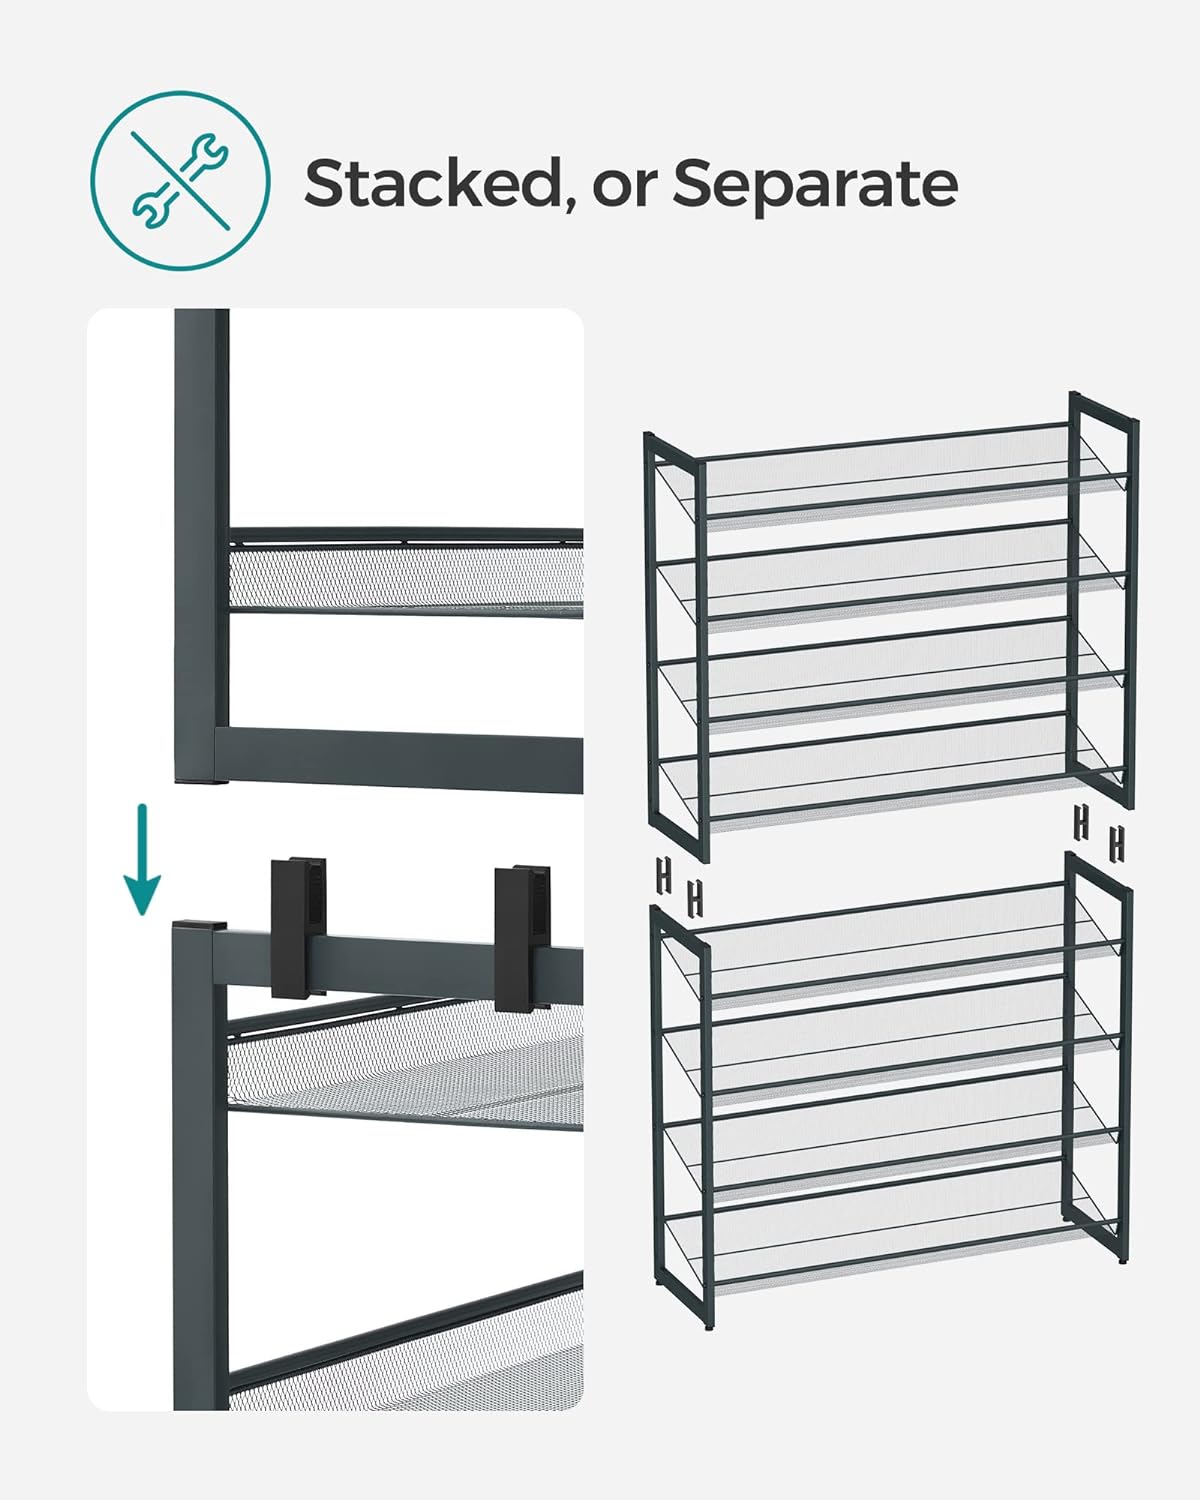 SONGMICS 8-Tier Shoe Rack Storage 32 pairs with Adjustable Shelves Gray